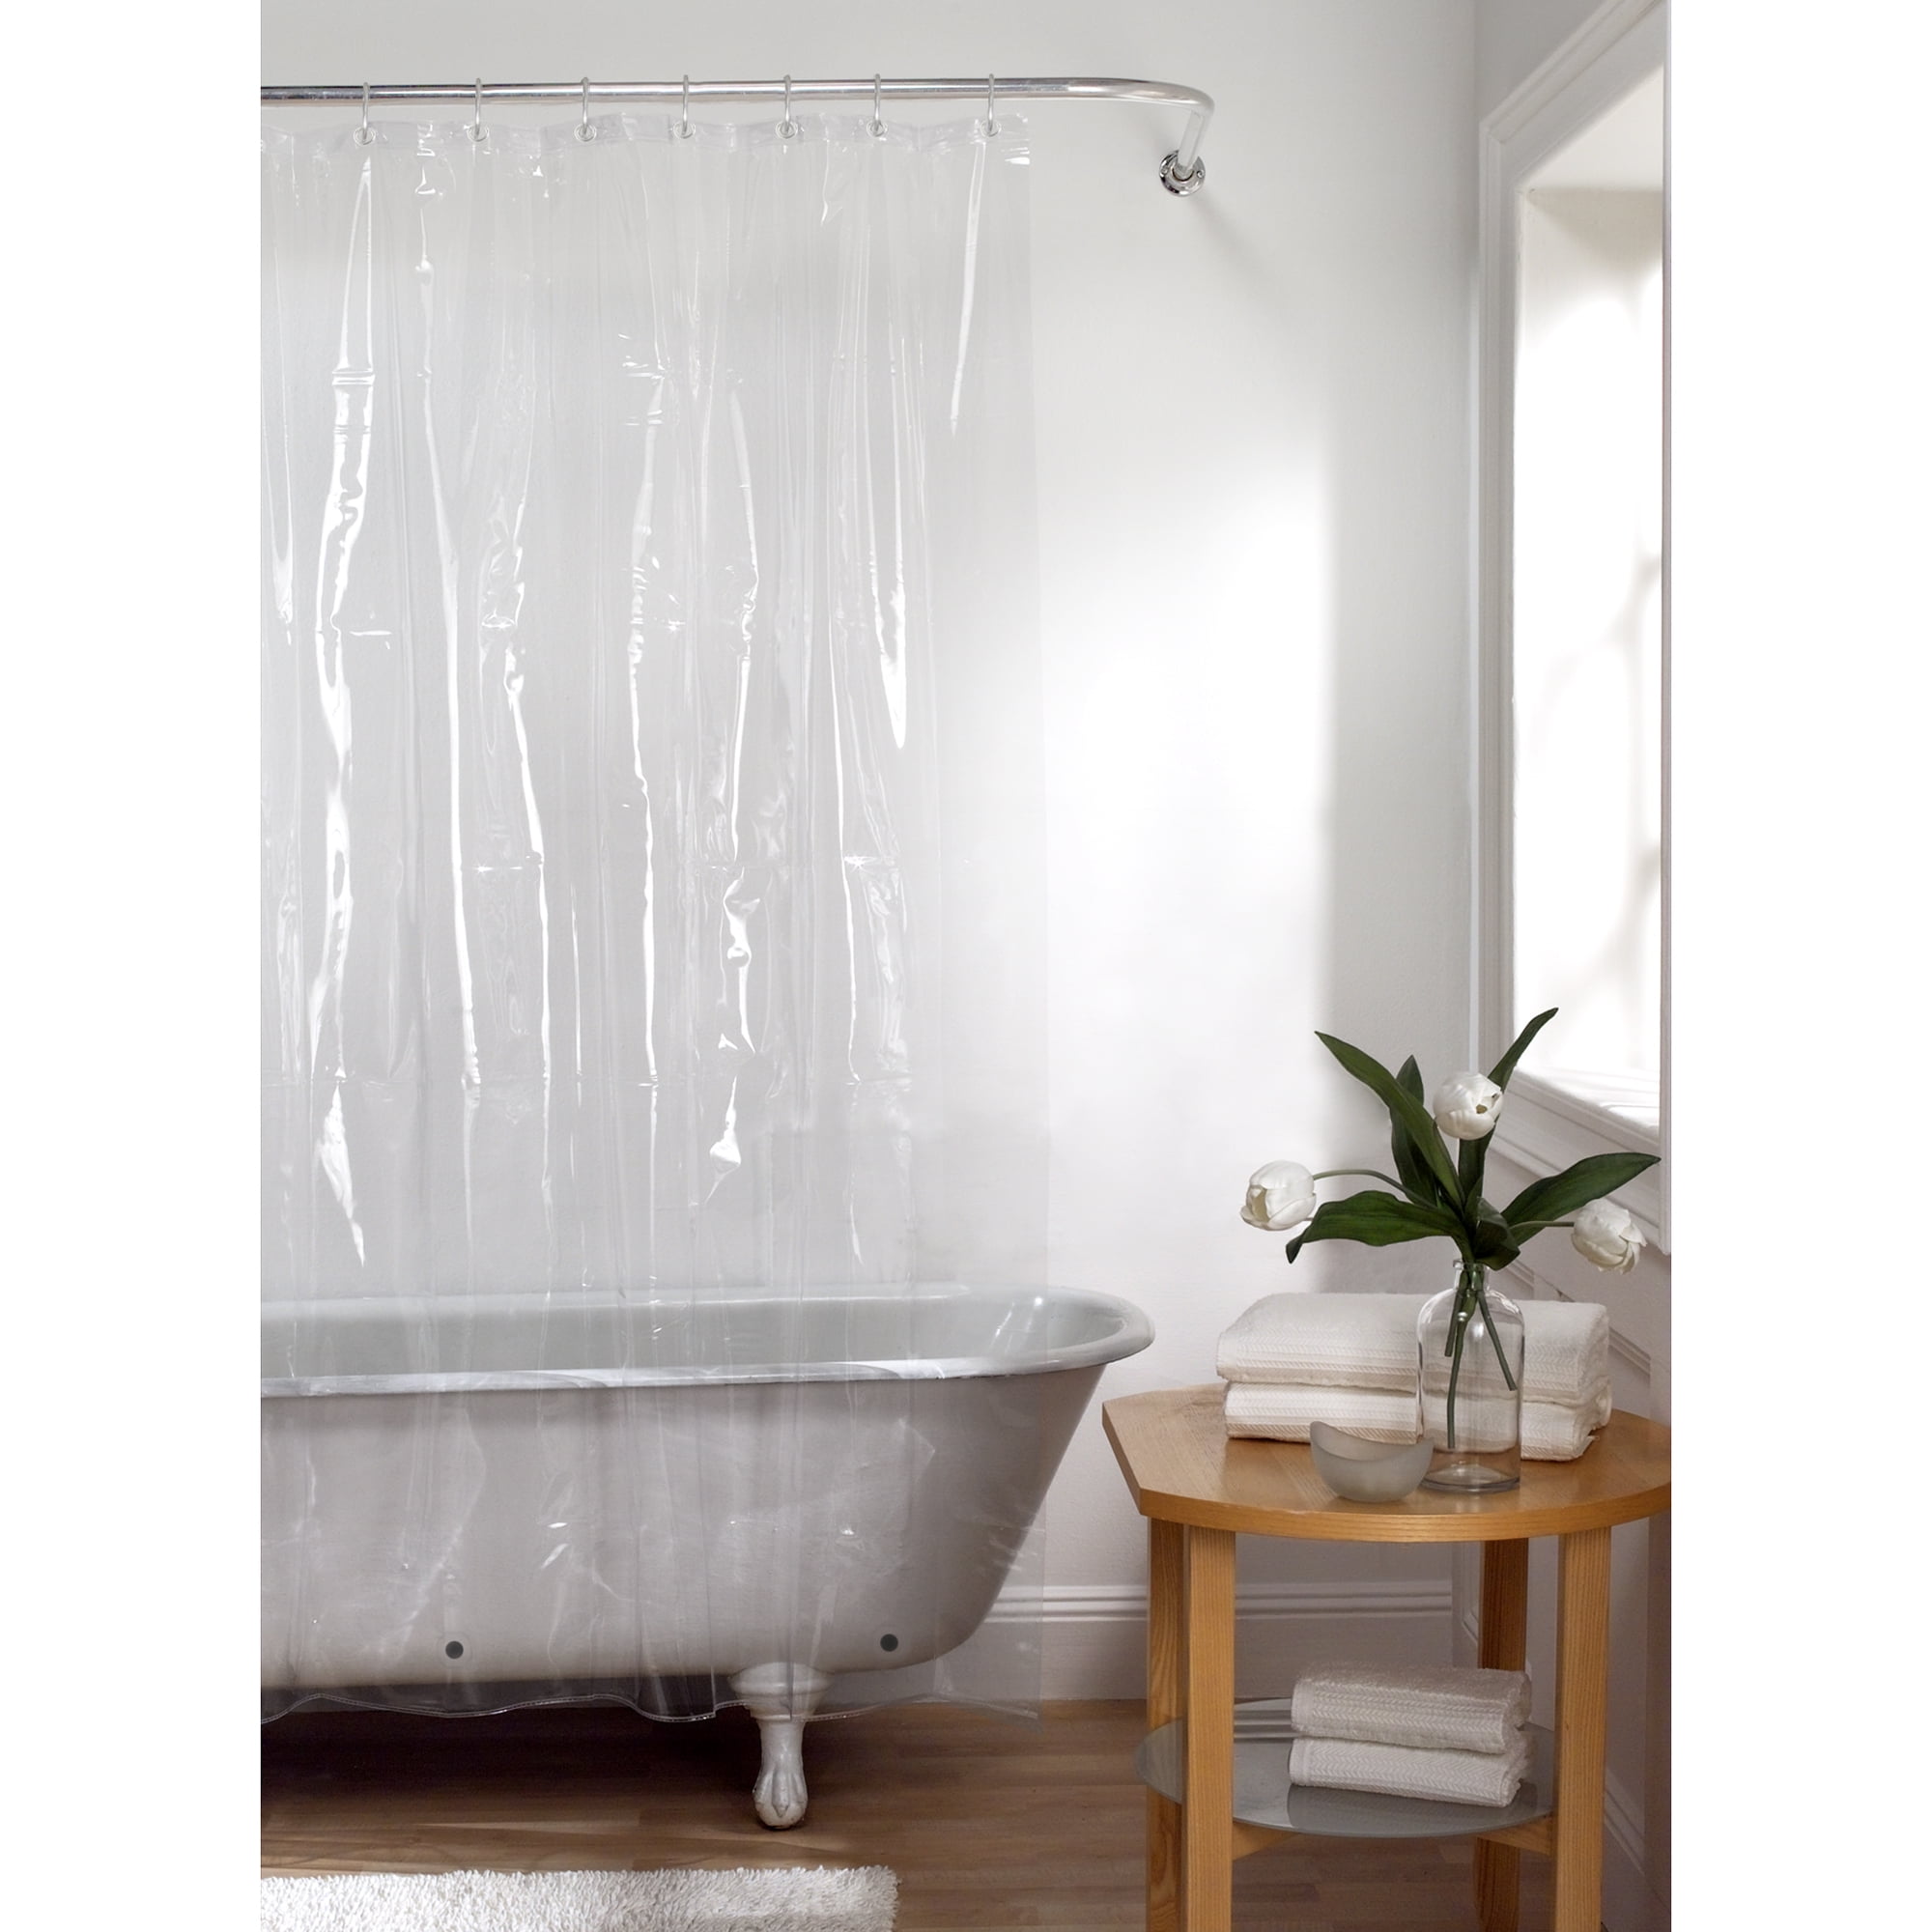 Carnation Home Fashions Waterproof 10 Gauge Vinyl Shower Curtain Liner 48 x 72 